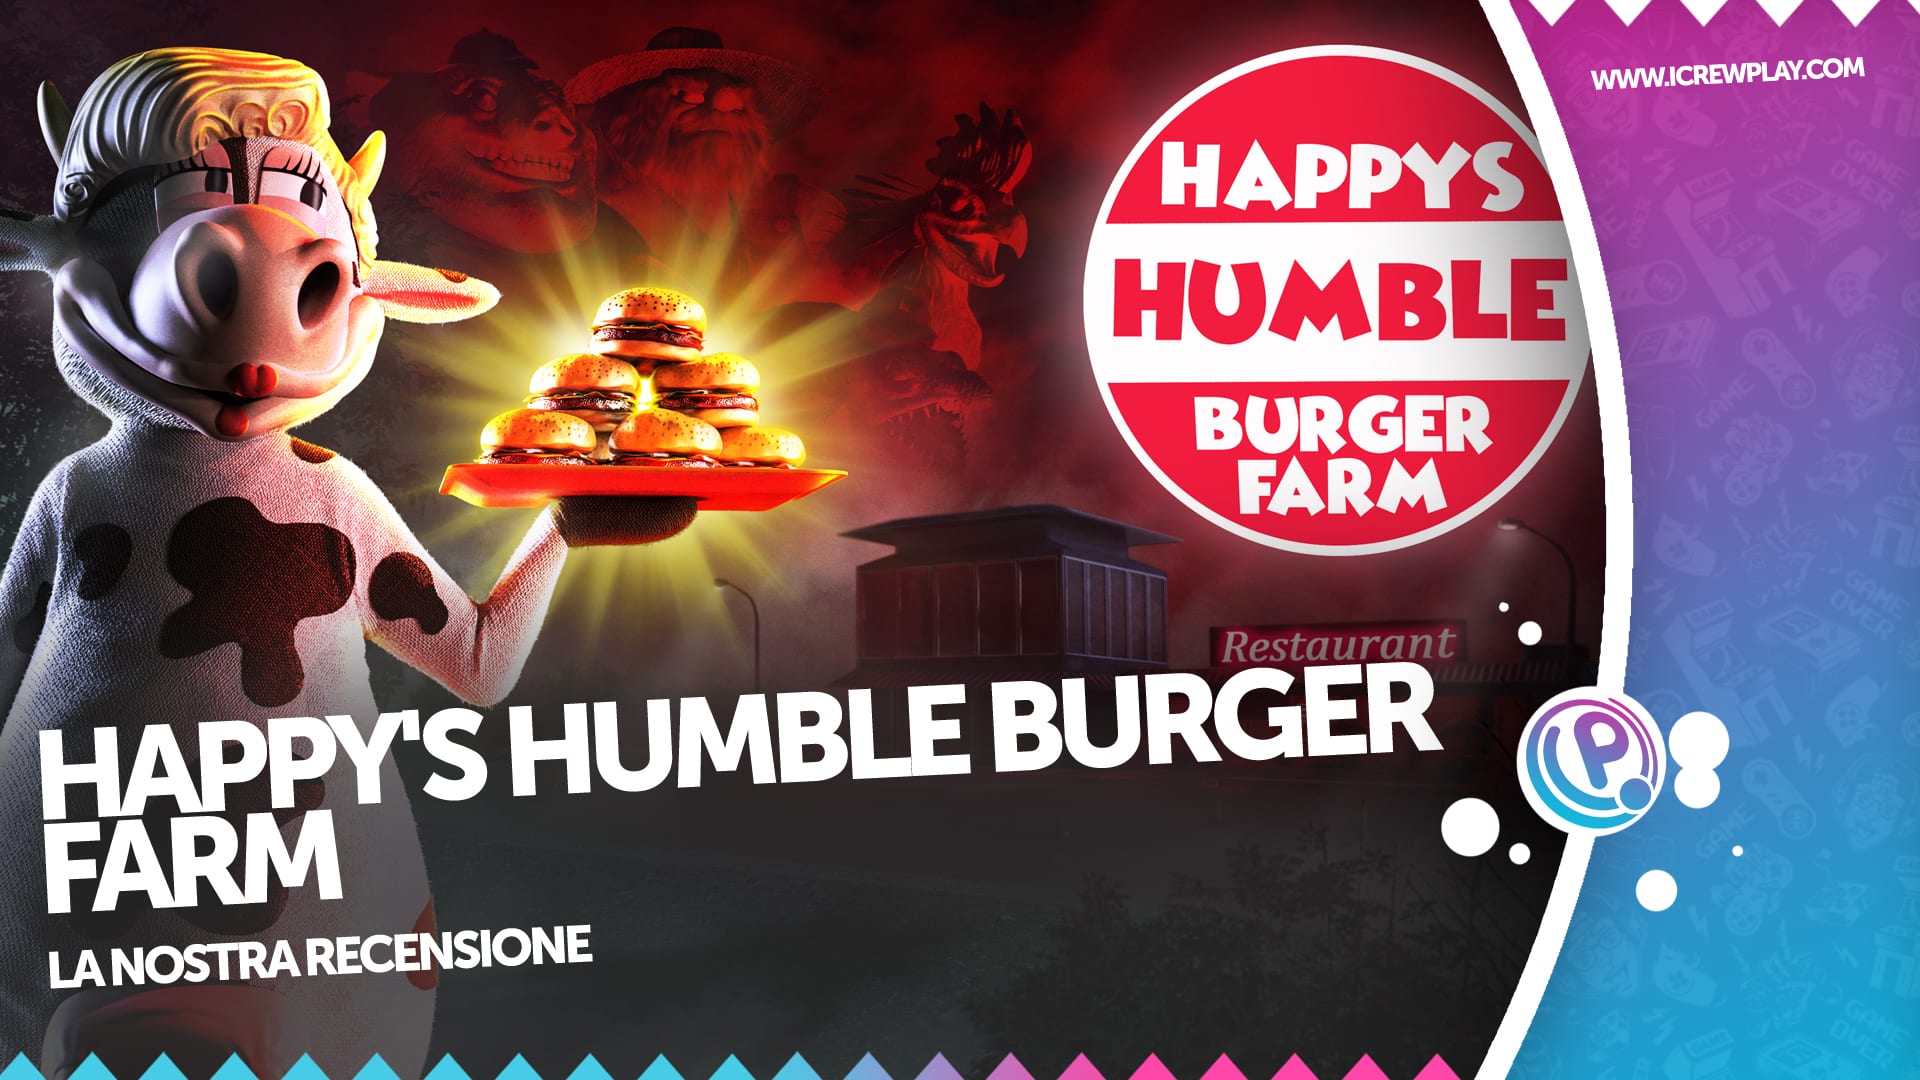 Happy's Humble Burger Farm recensione